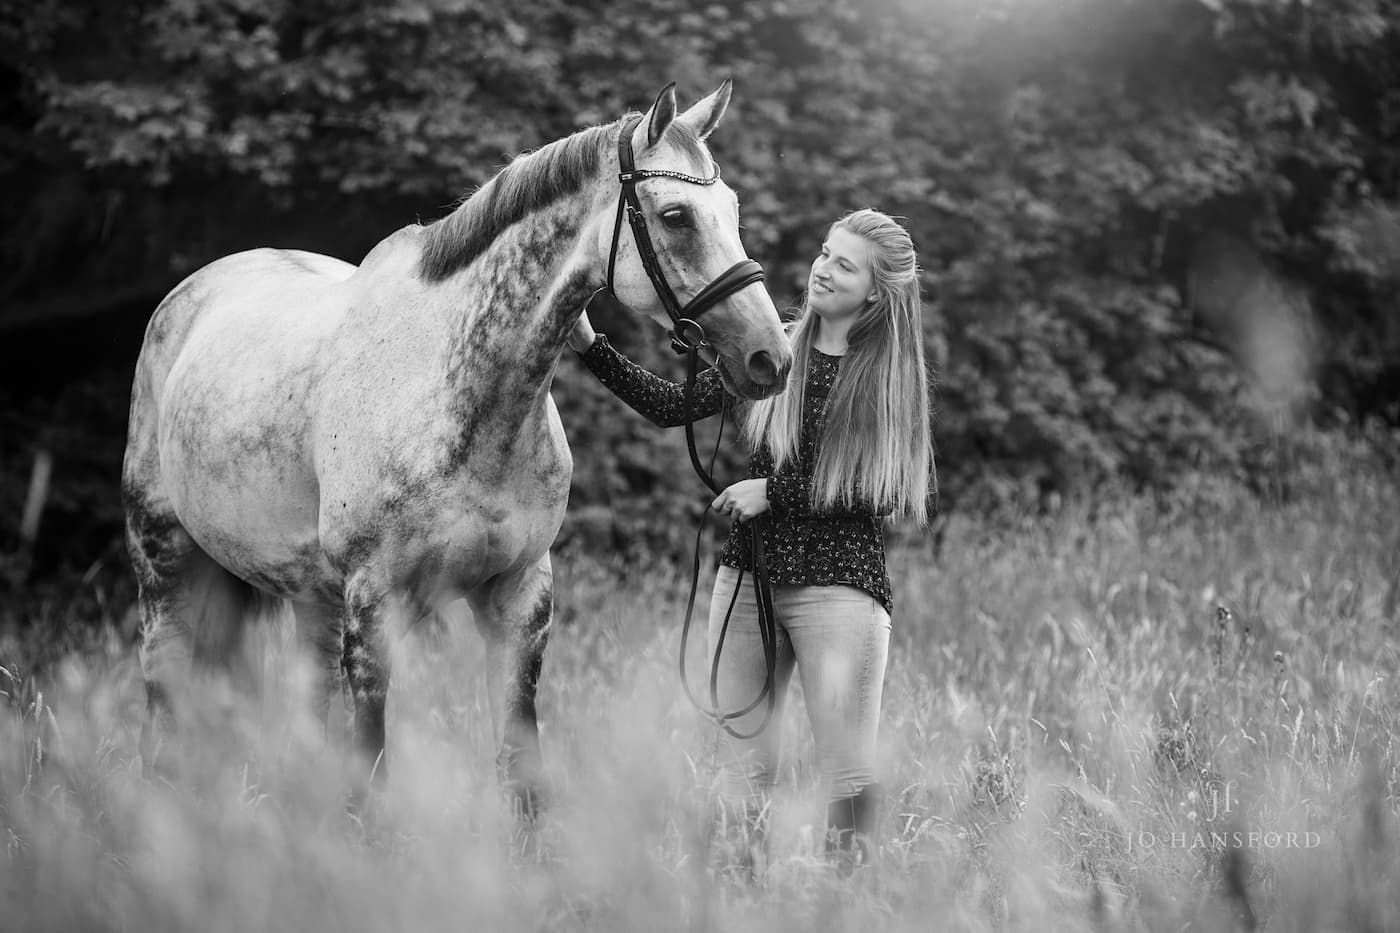 Horse photographer Cotswolds Jo Hansford